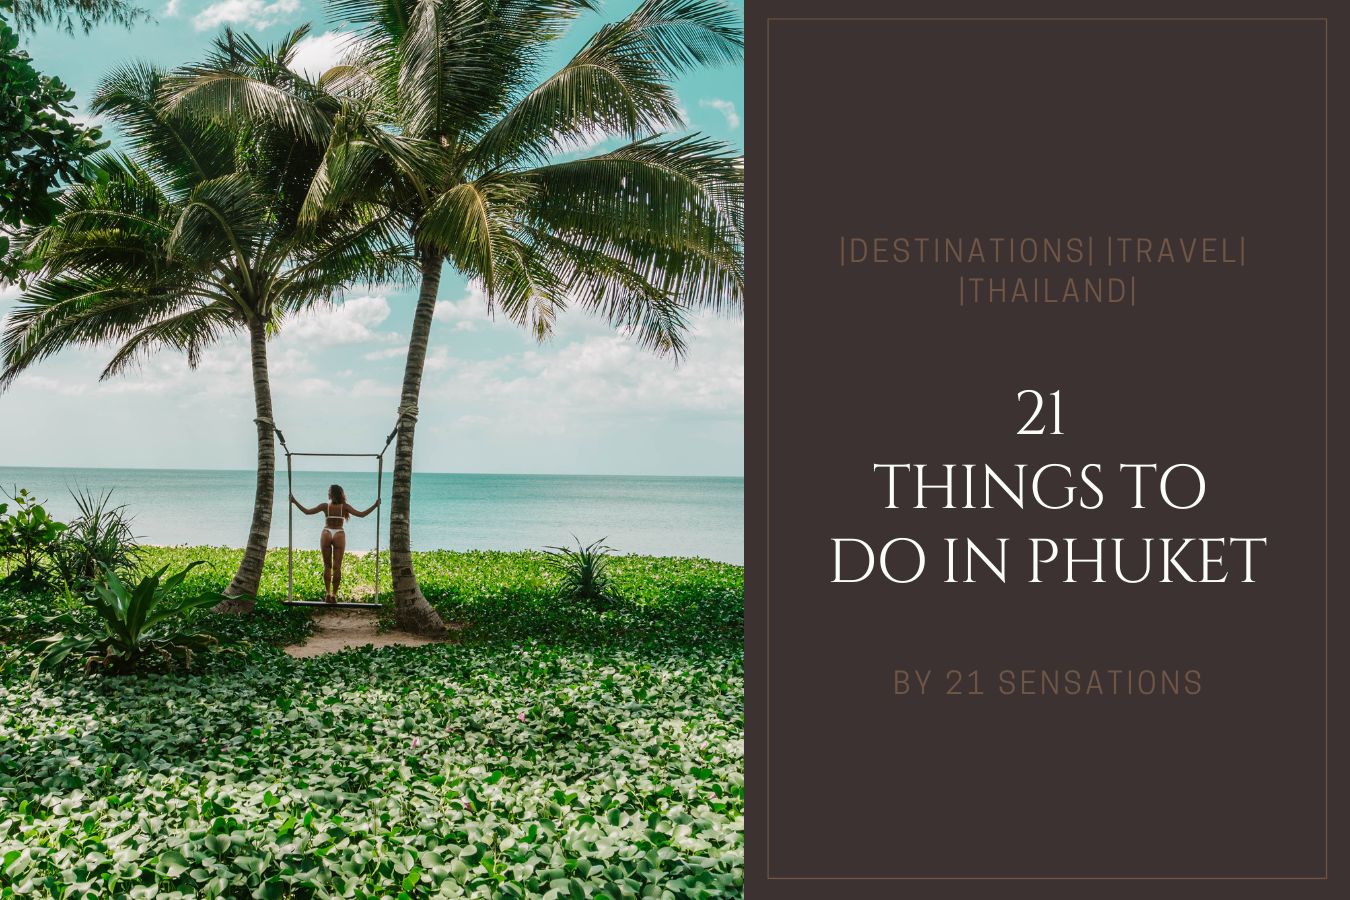 Phuket Travel Guide 21 Things to Do in Phuket